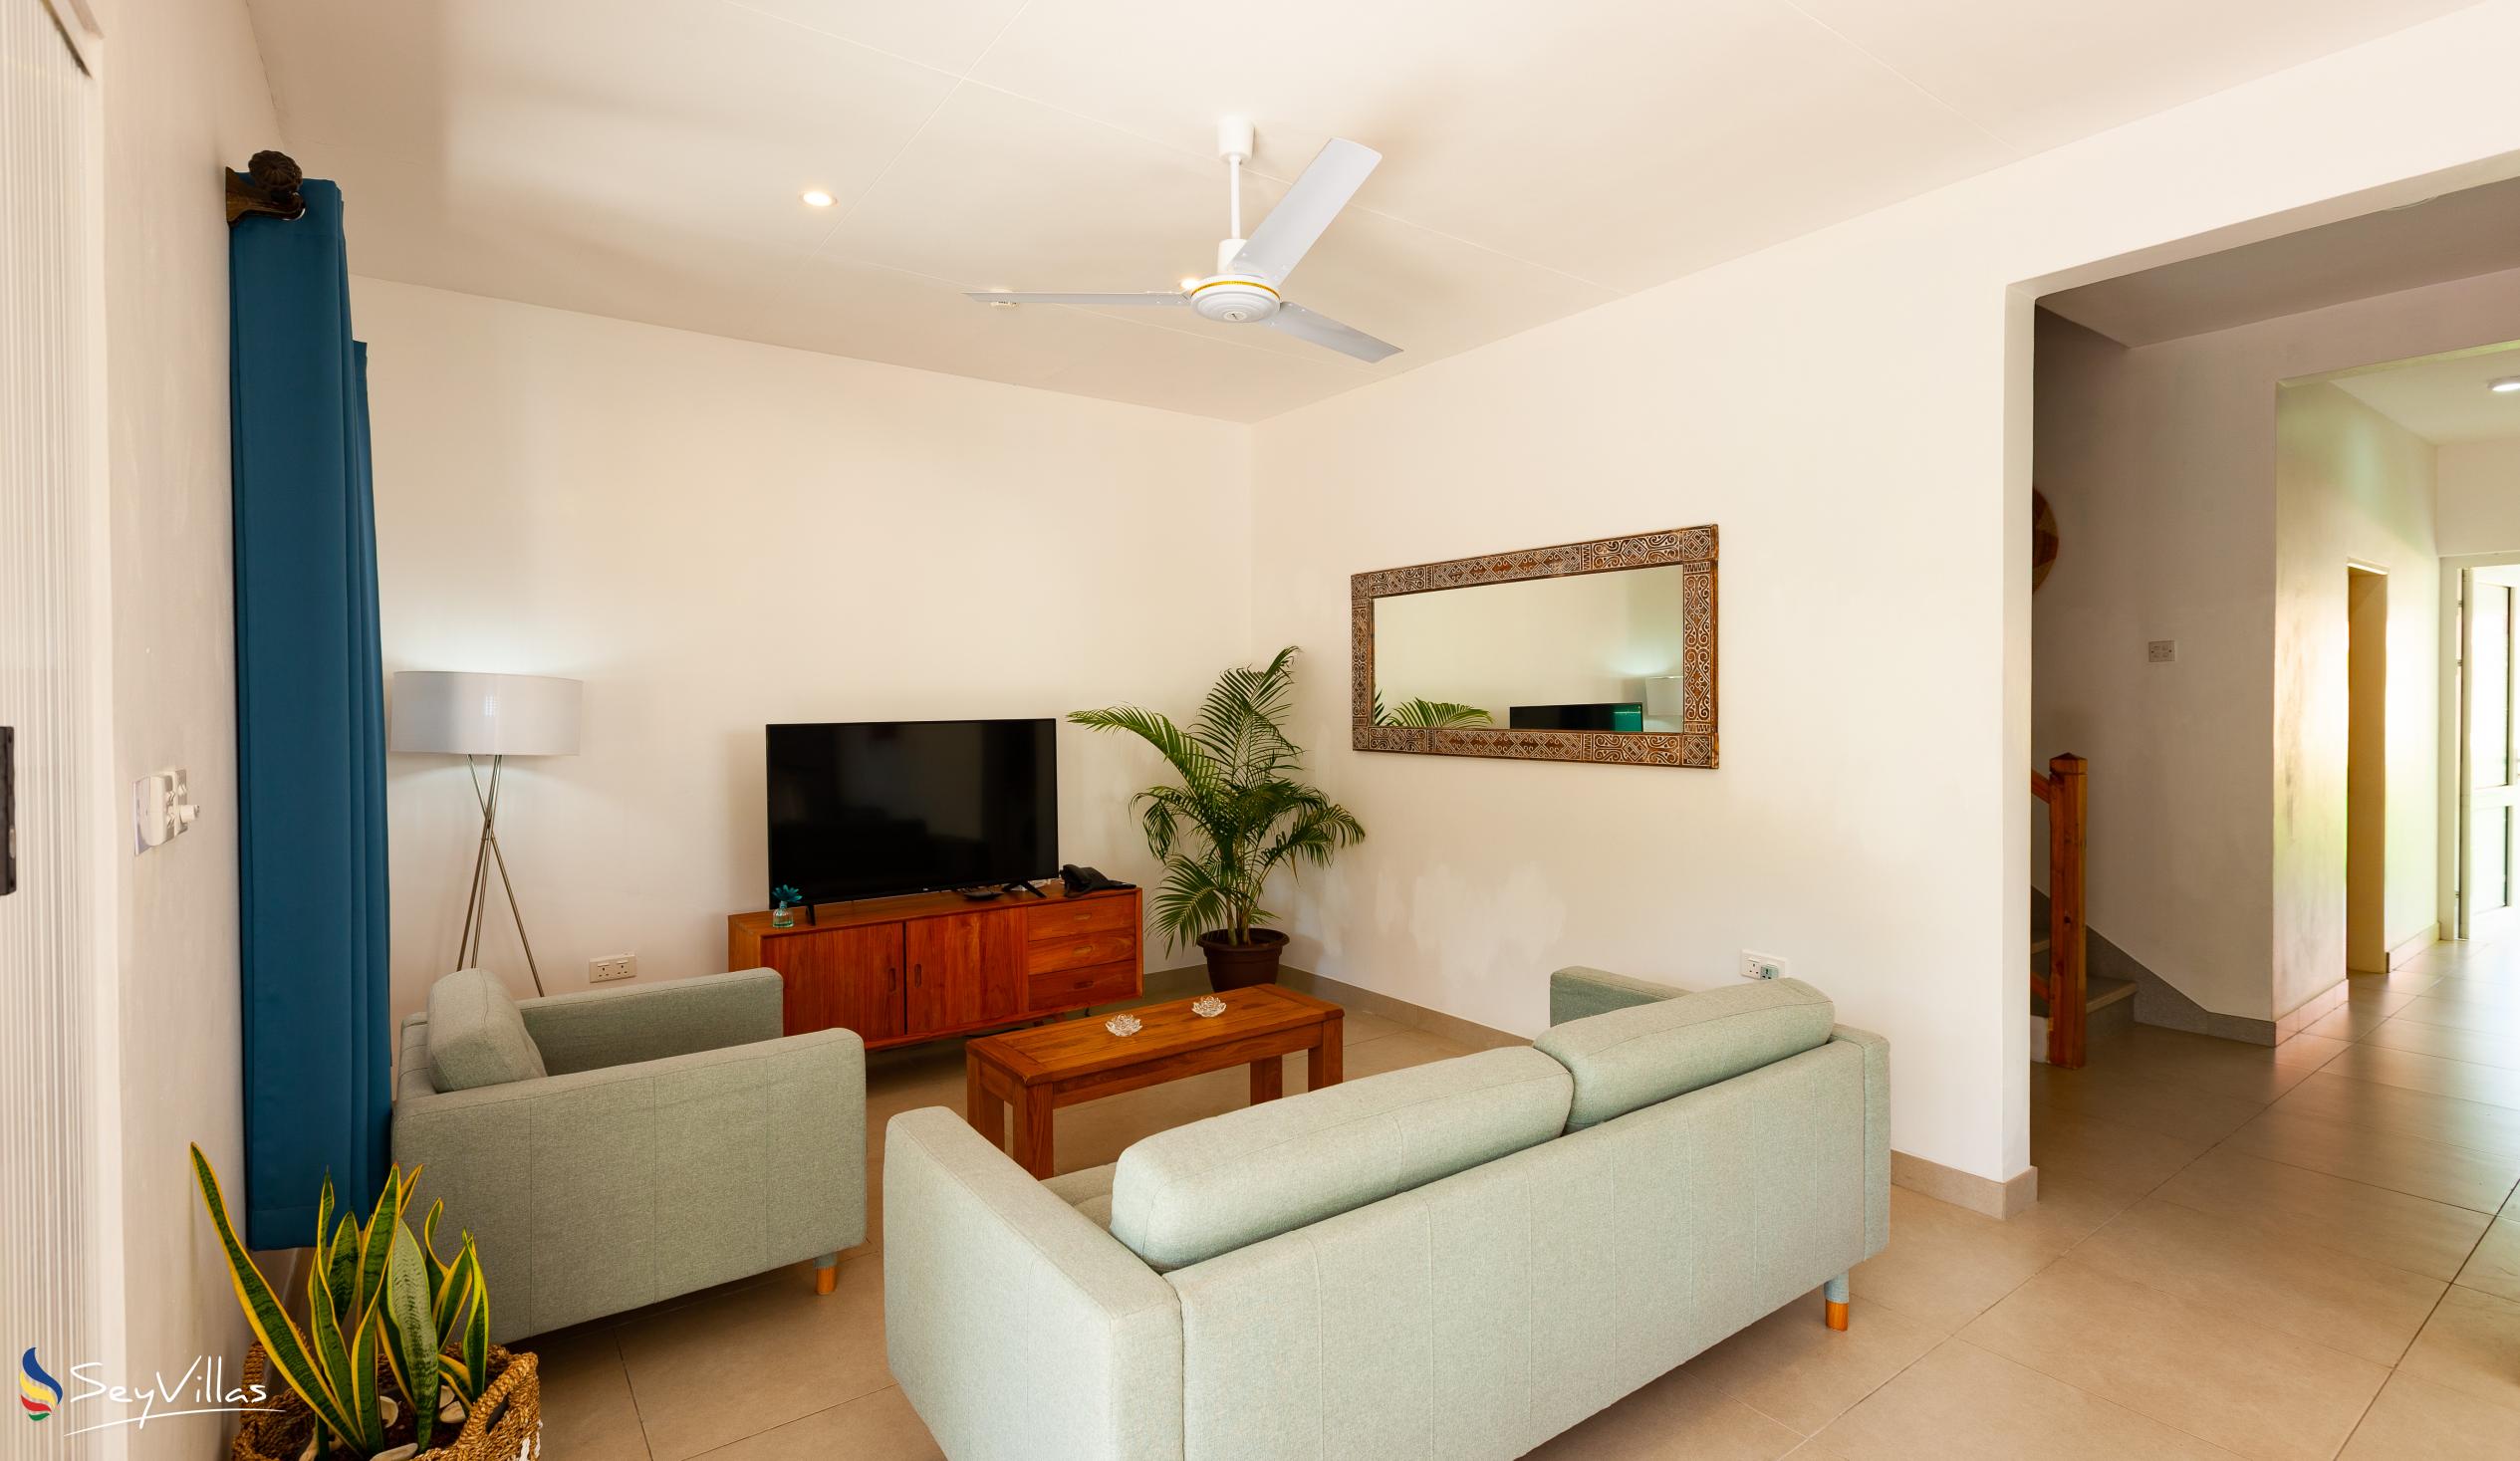 Foto 31: Maison Marie-Jeanne - Appartamento con 4 camere - Praslin (Seychelles)